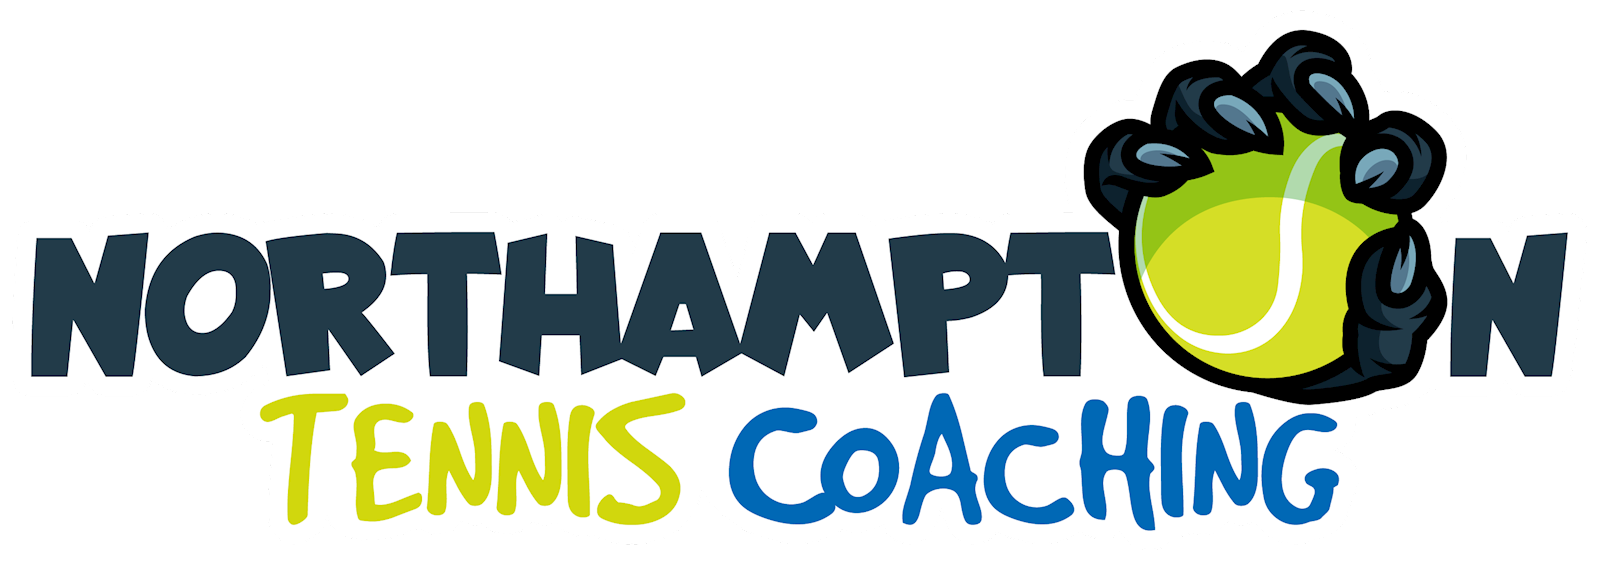 Northampton Tennis Coaching